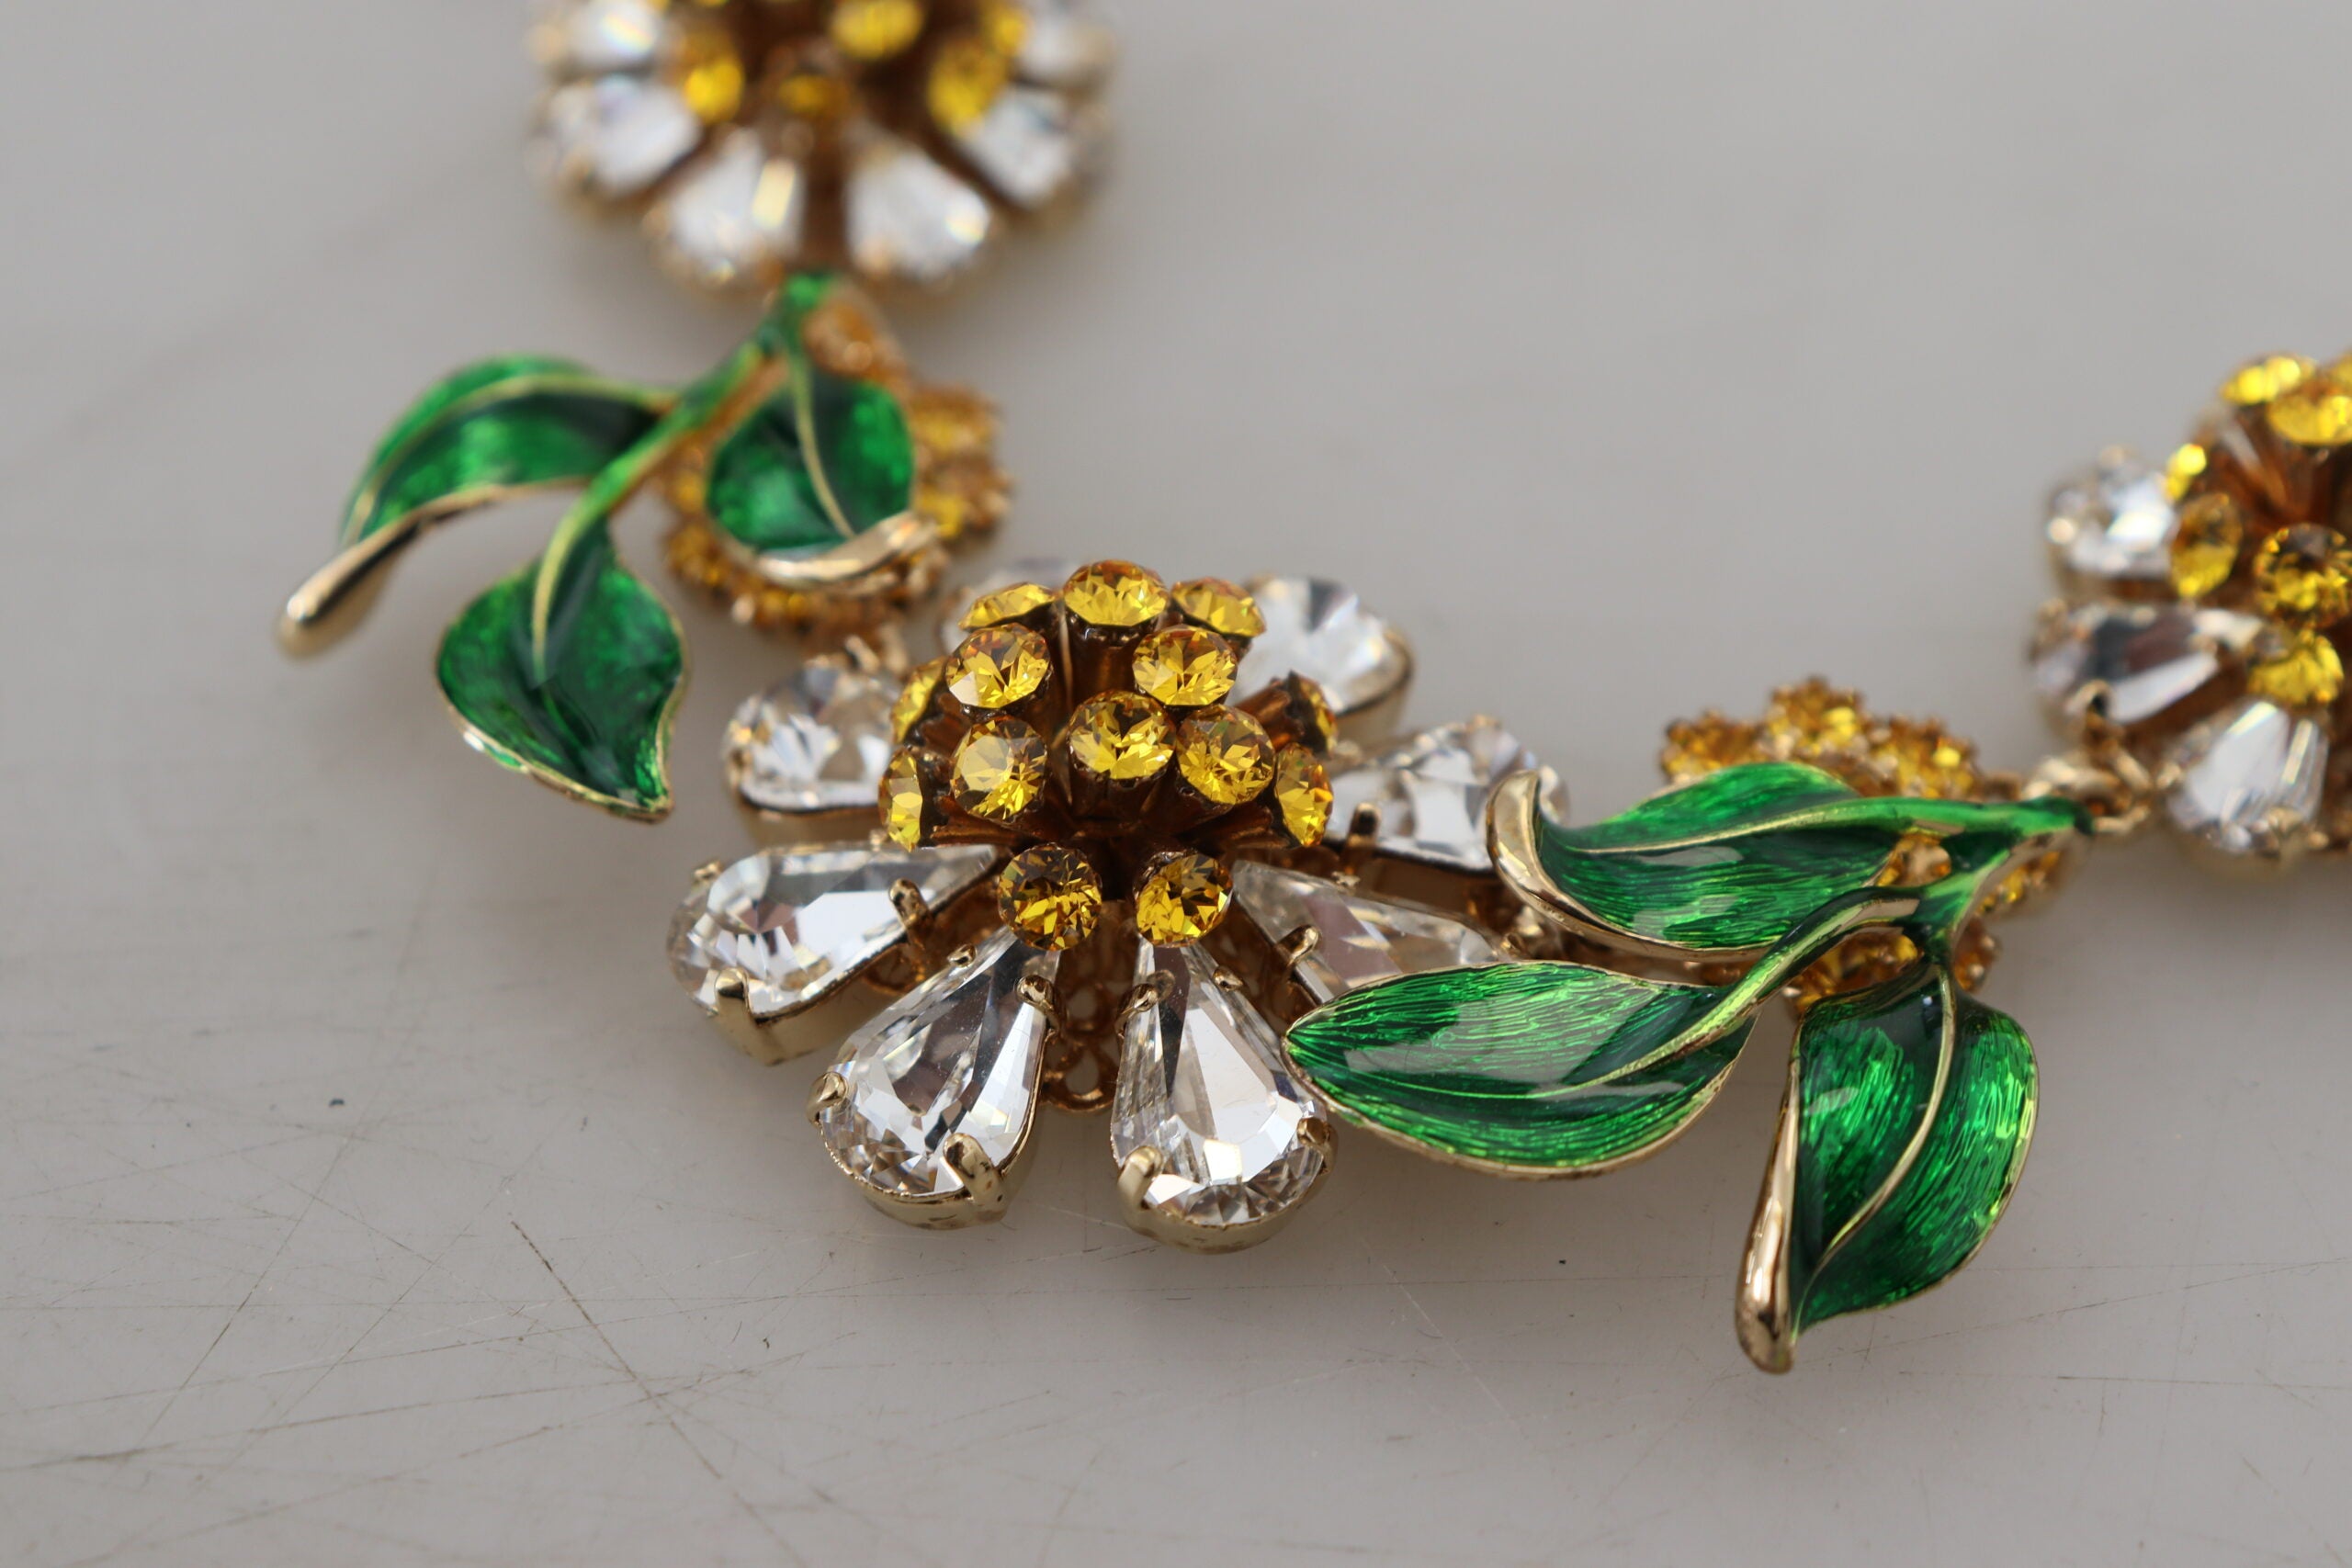 Dolce & Gabbana Elegant Gold Tone Crystal Statement Necklace